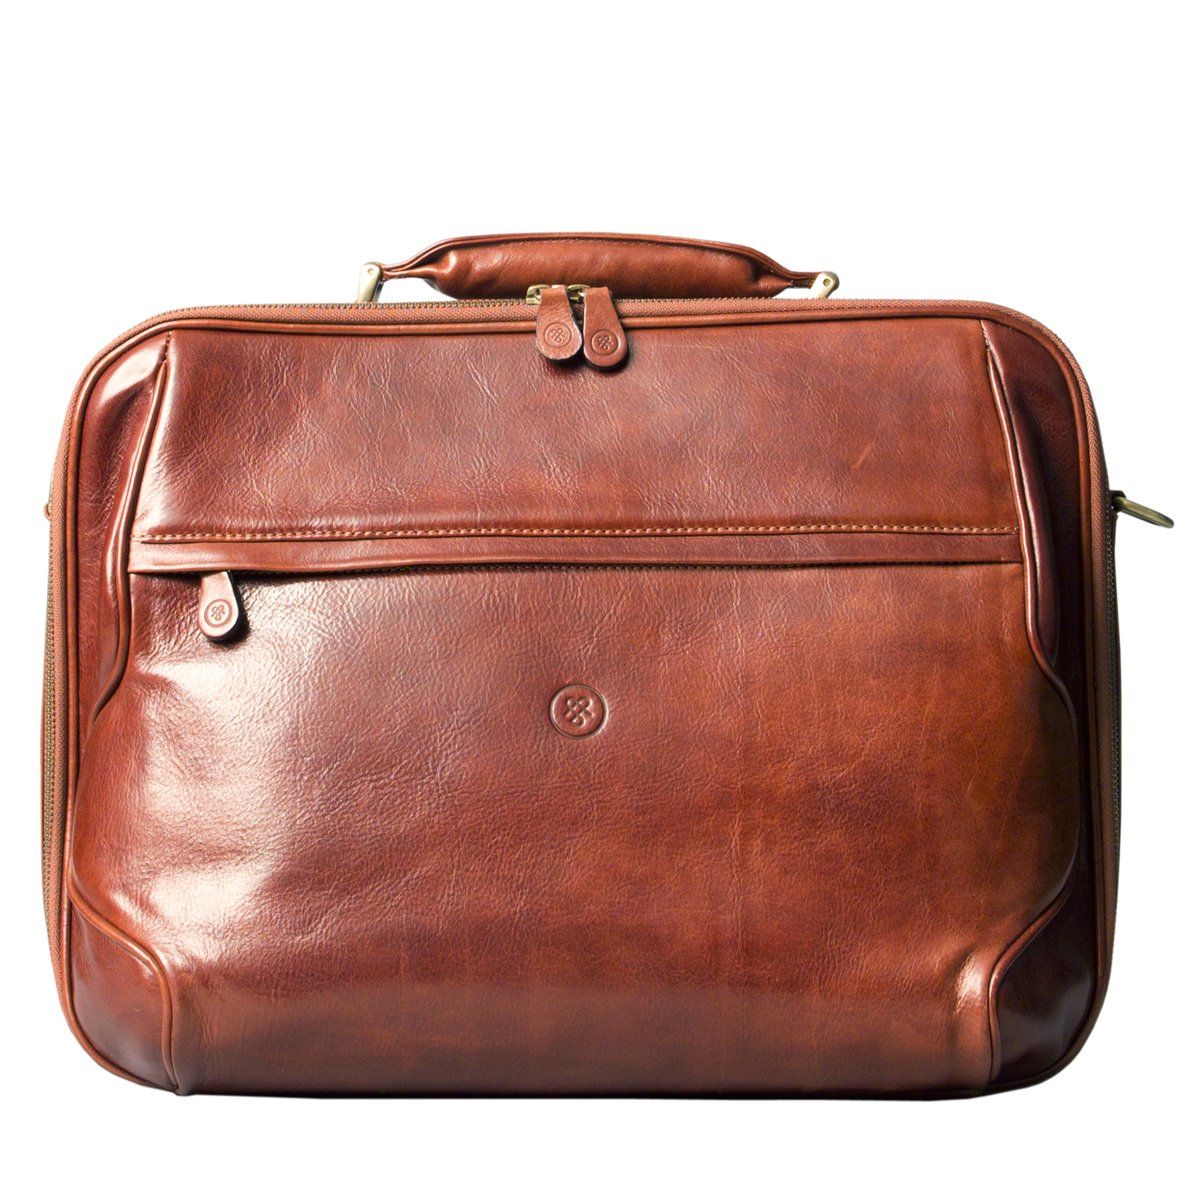 MAHEU's Genuine Cowhide Leather Luxury Laptop Bags